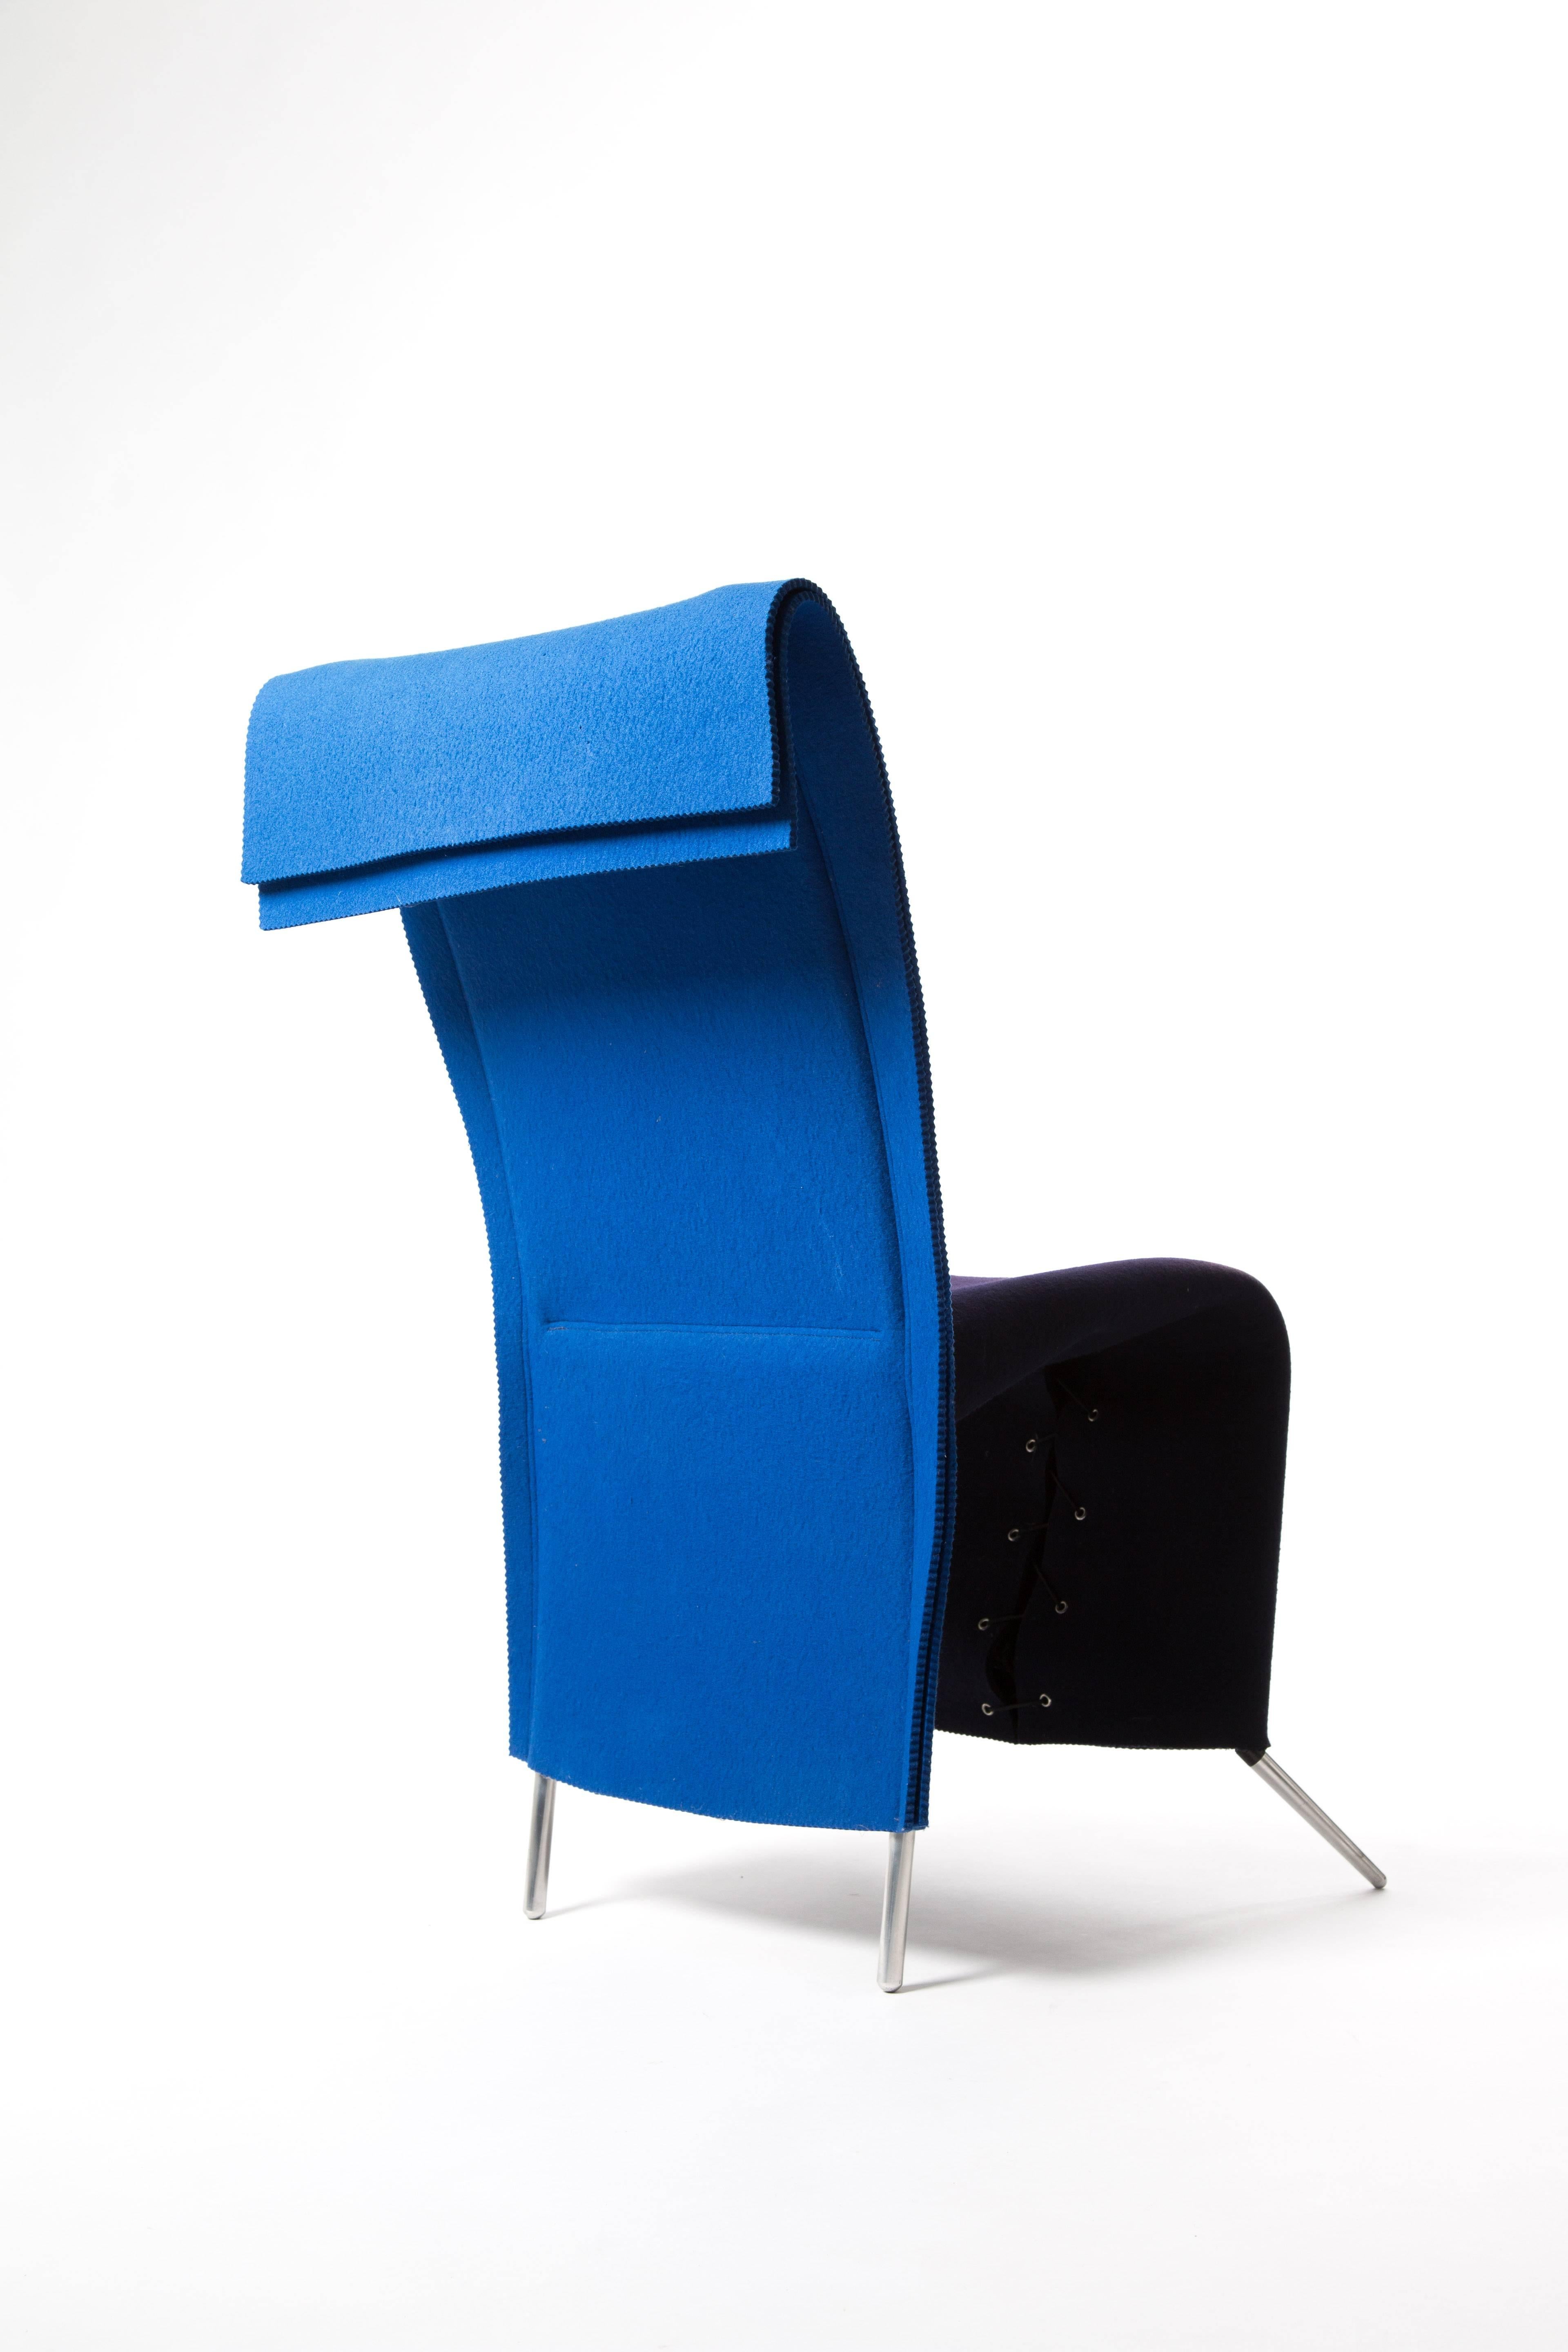 Borek Sipek Filzka Chair for Scarabas Made of Felt 2